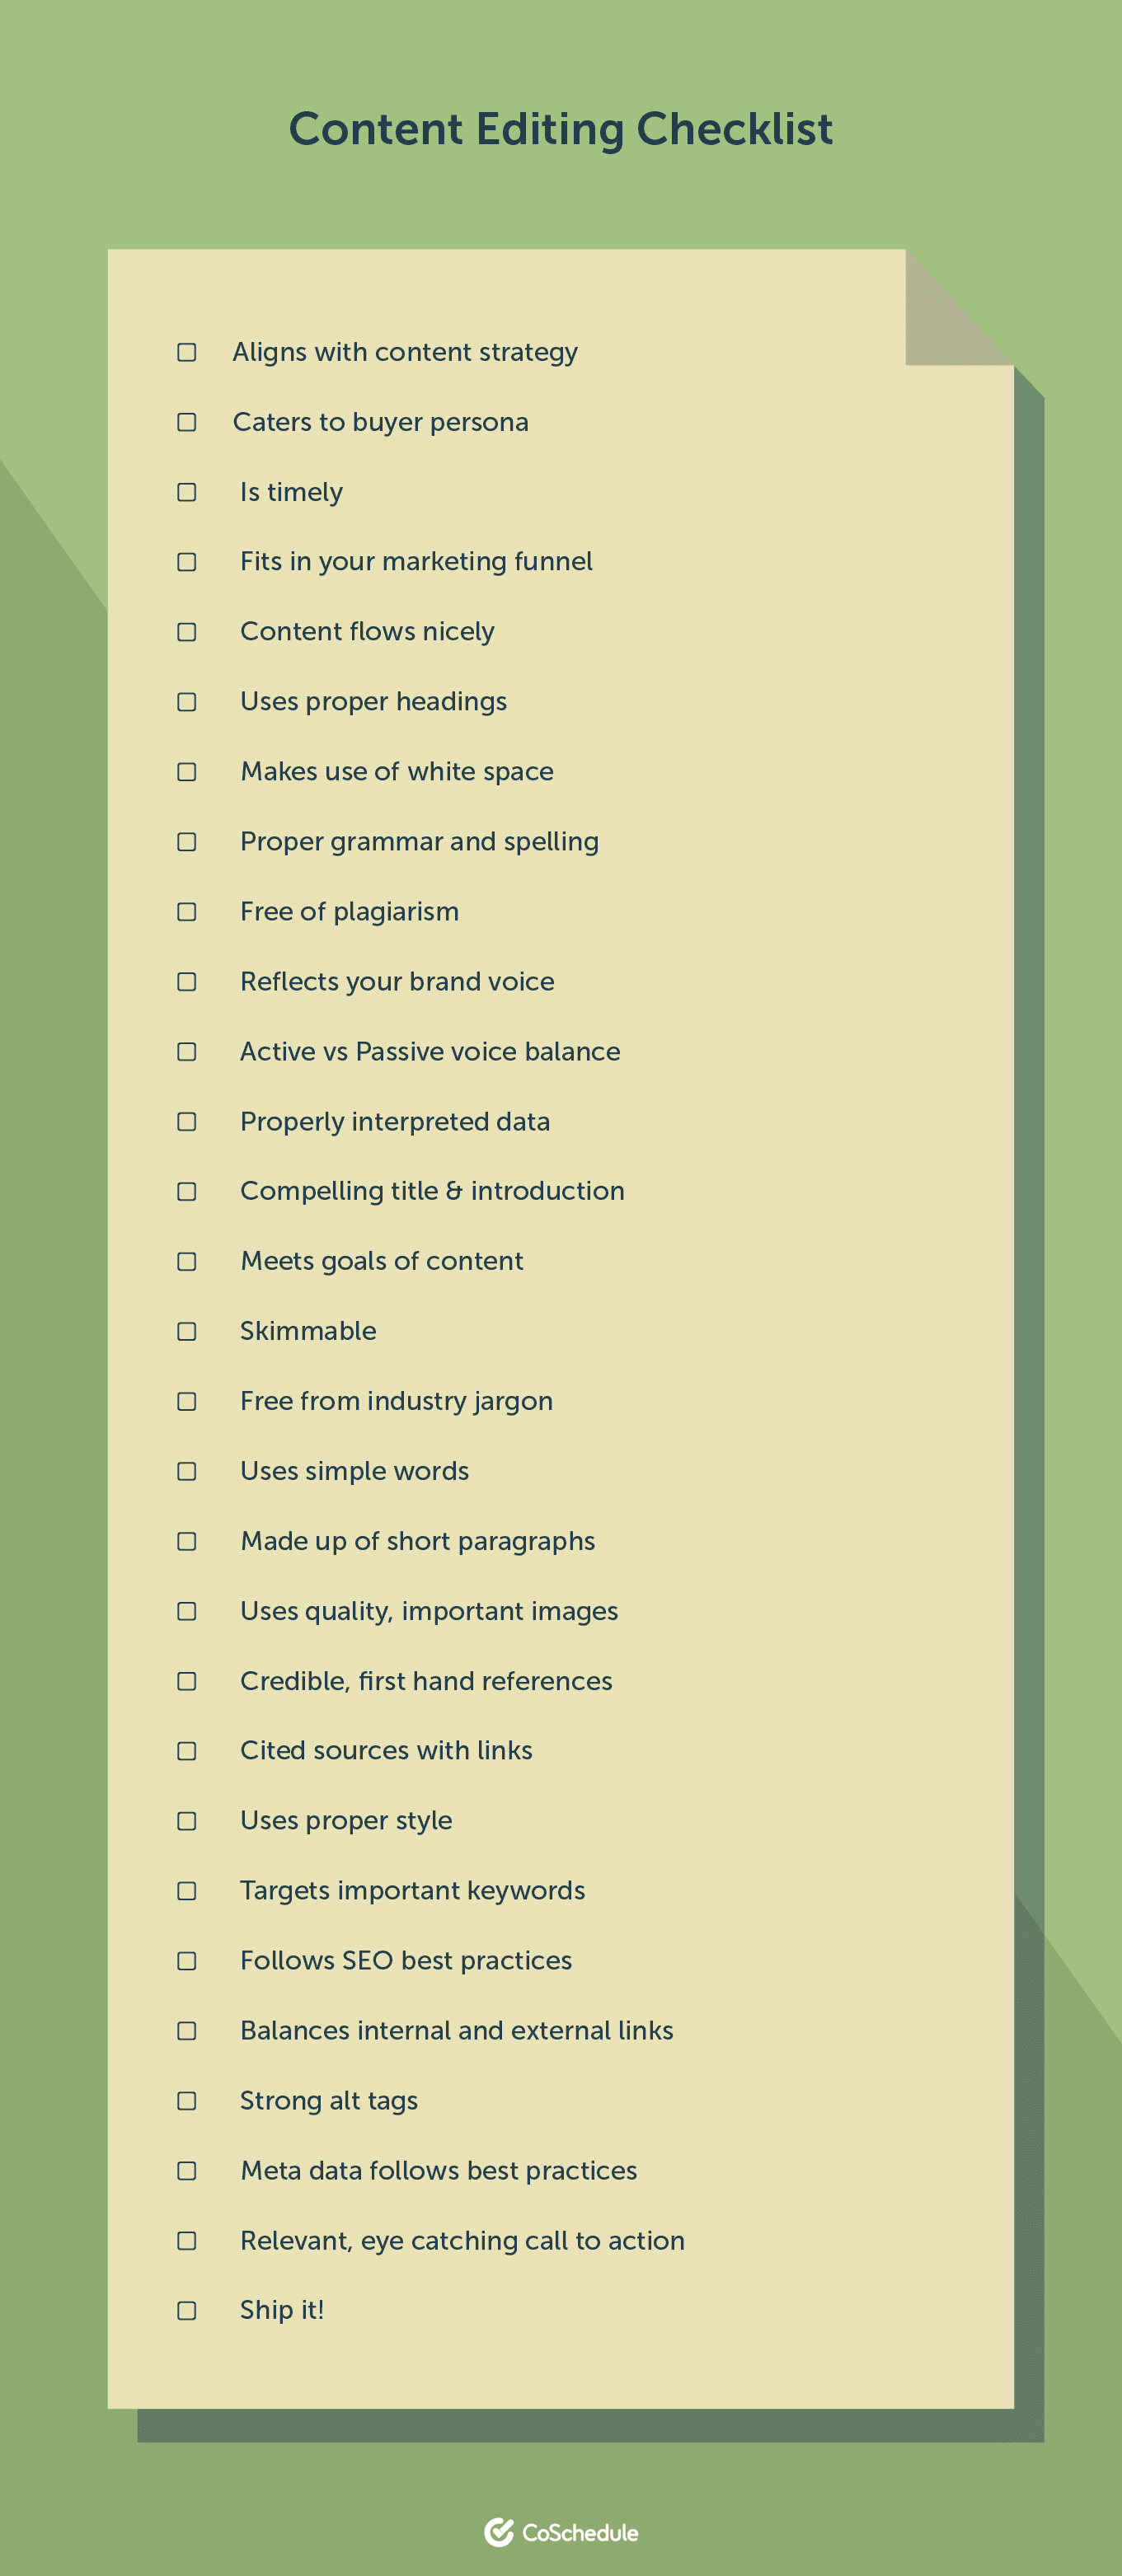 Content editing checklist